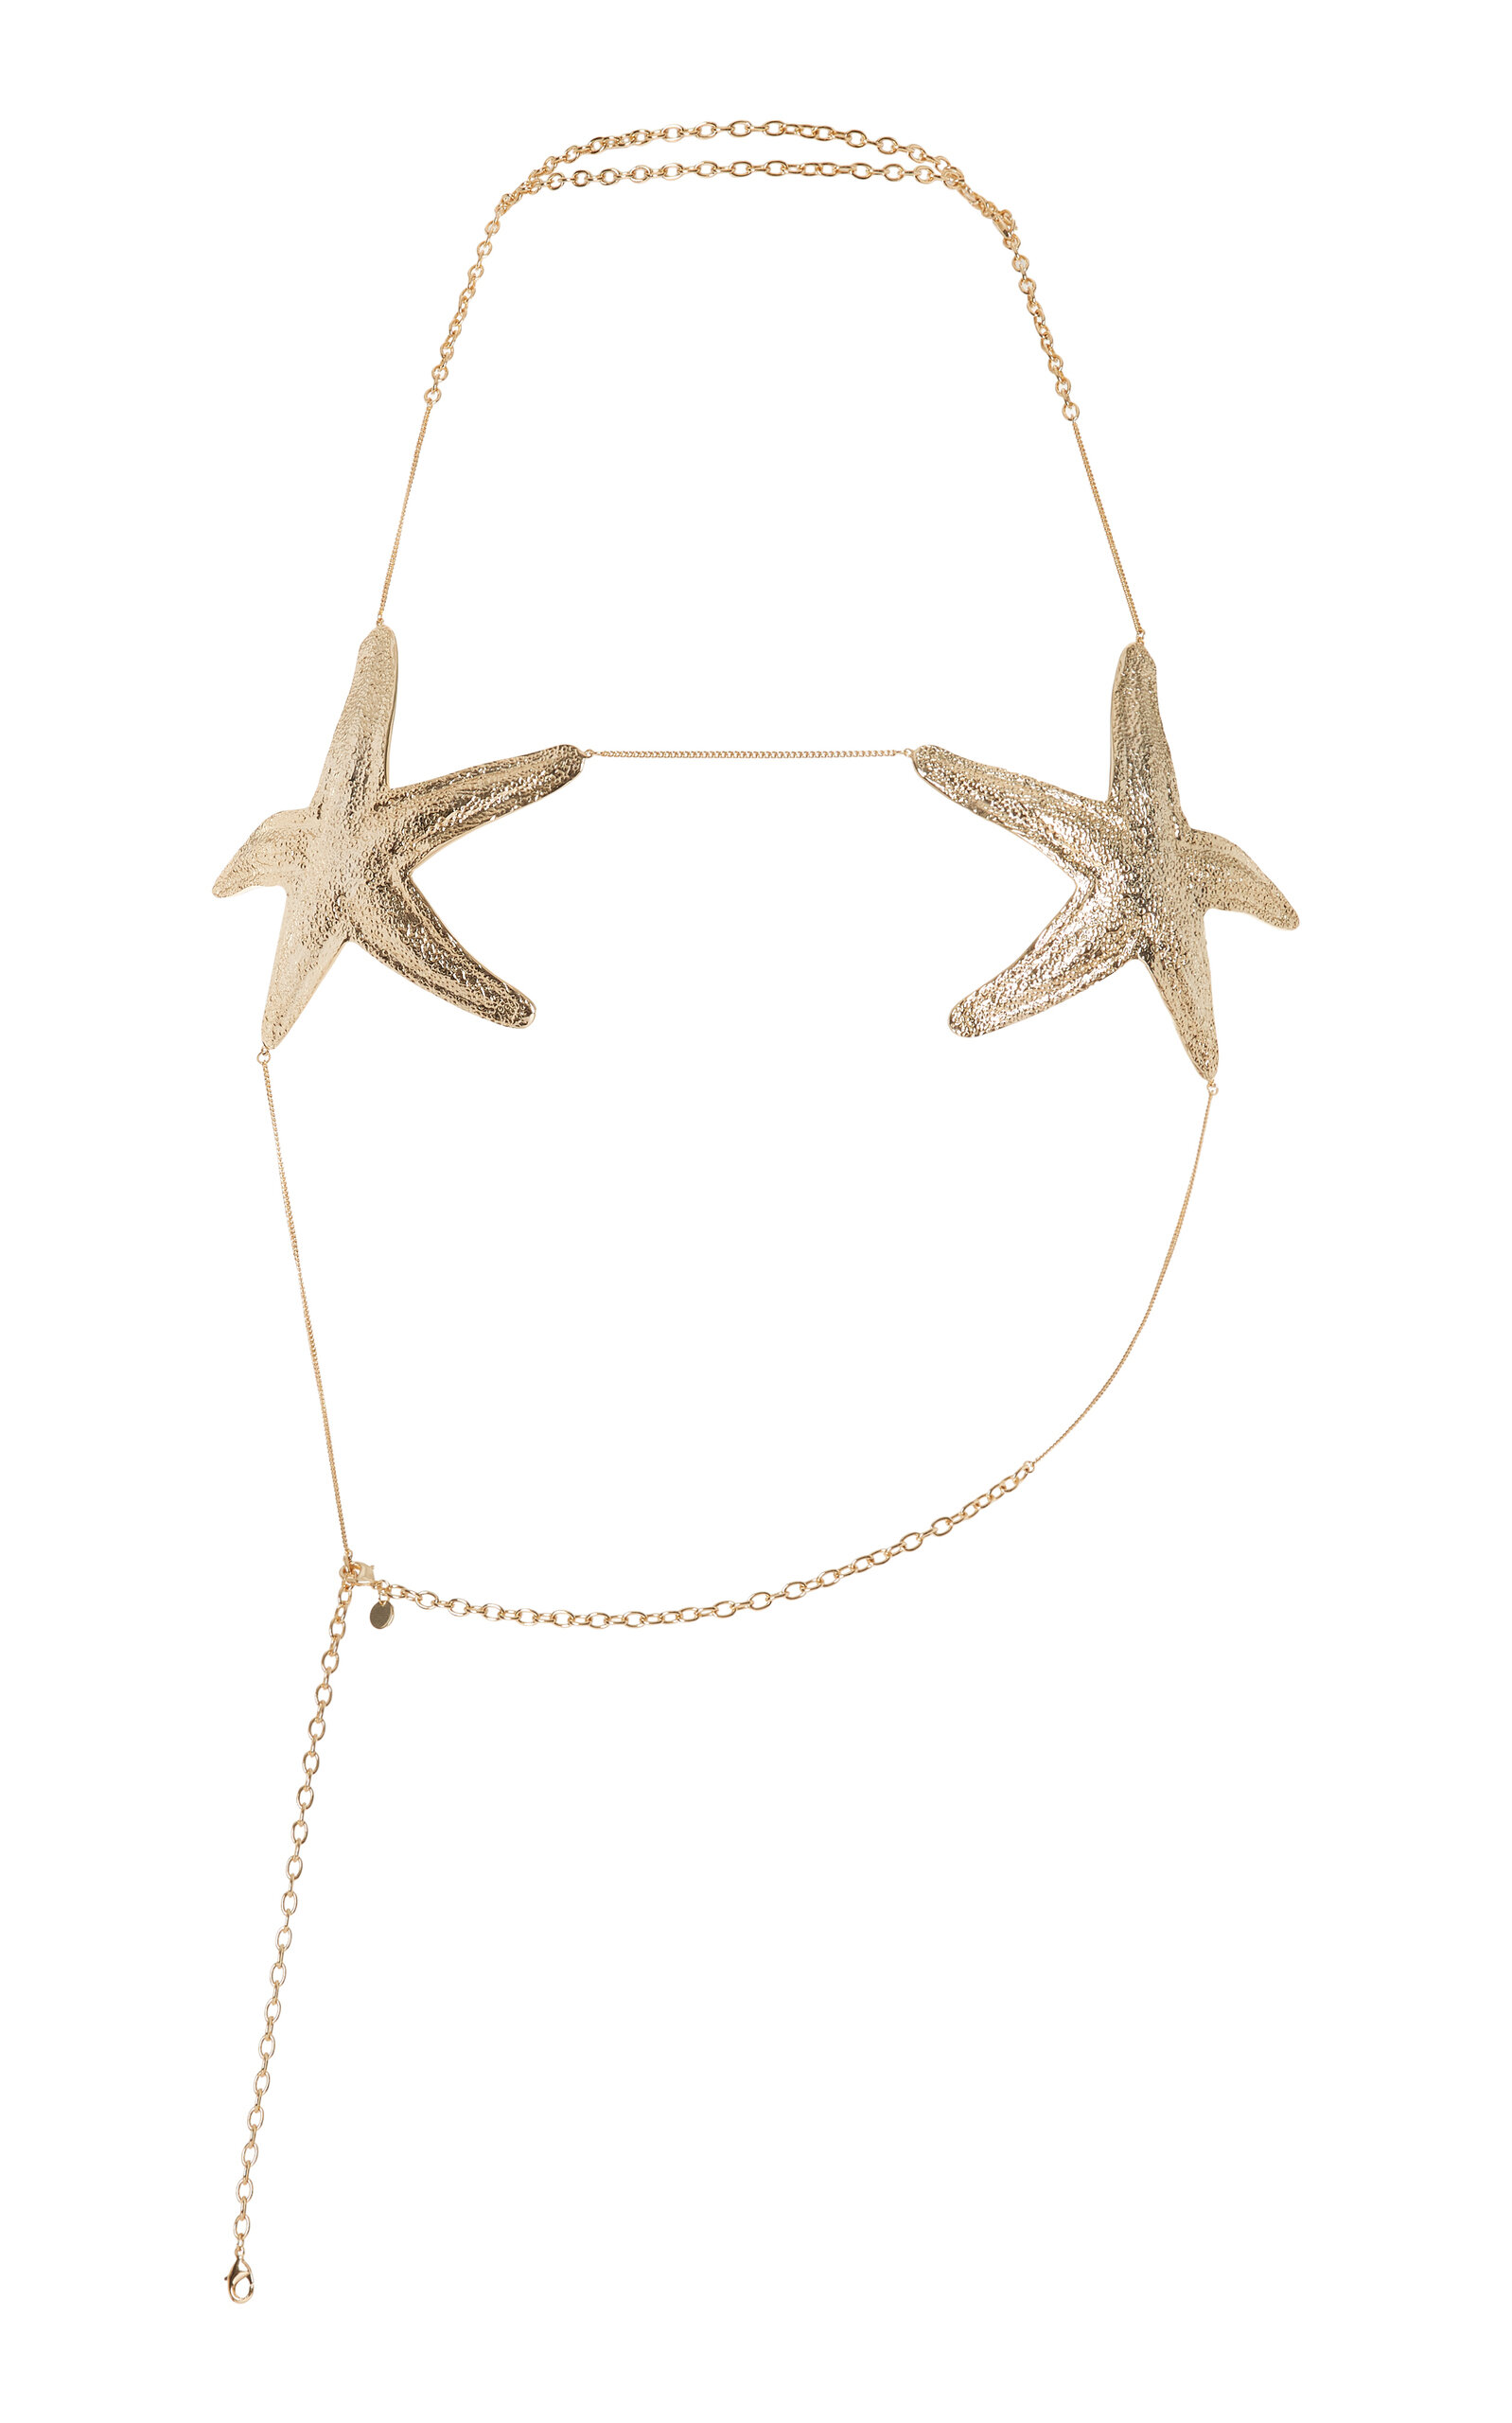 Cult Gaia - Ariel Starfish Brass Bra Necklace - Gold - OS - Moda Operandi - Gifts For Her